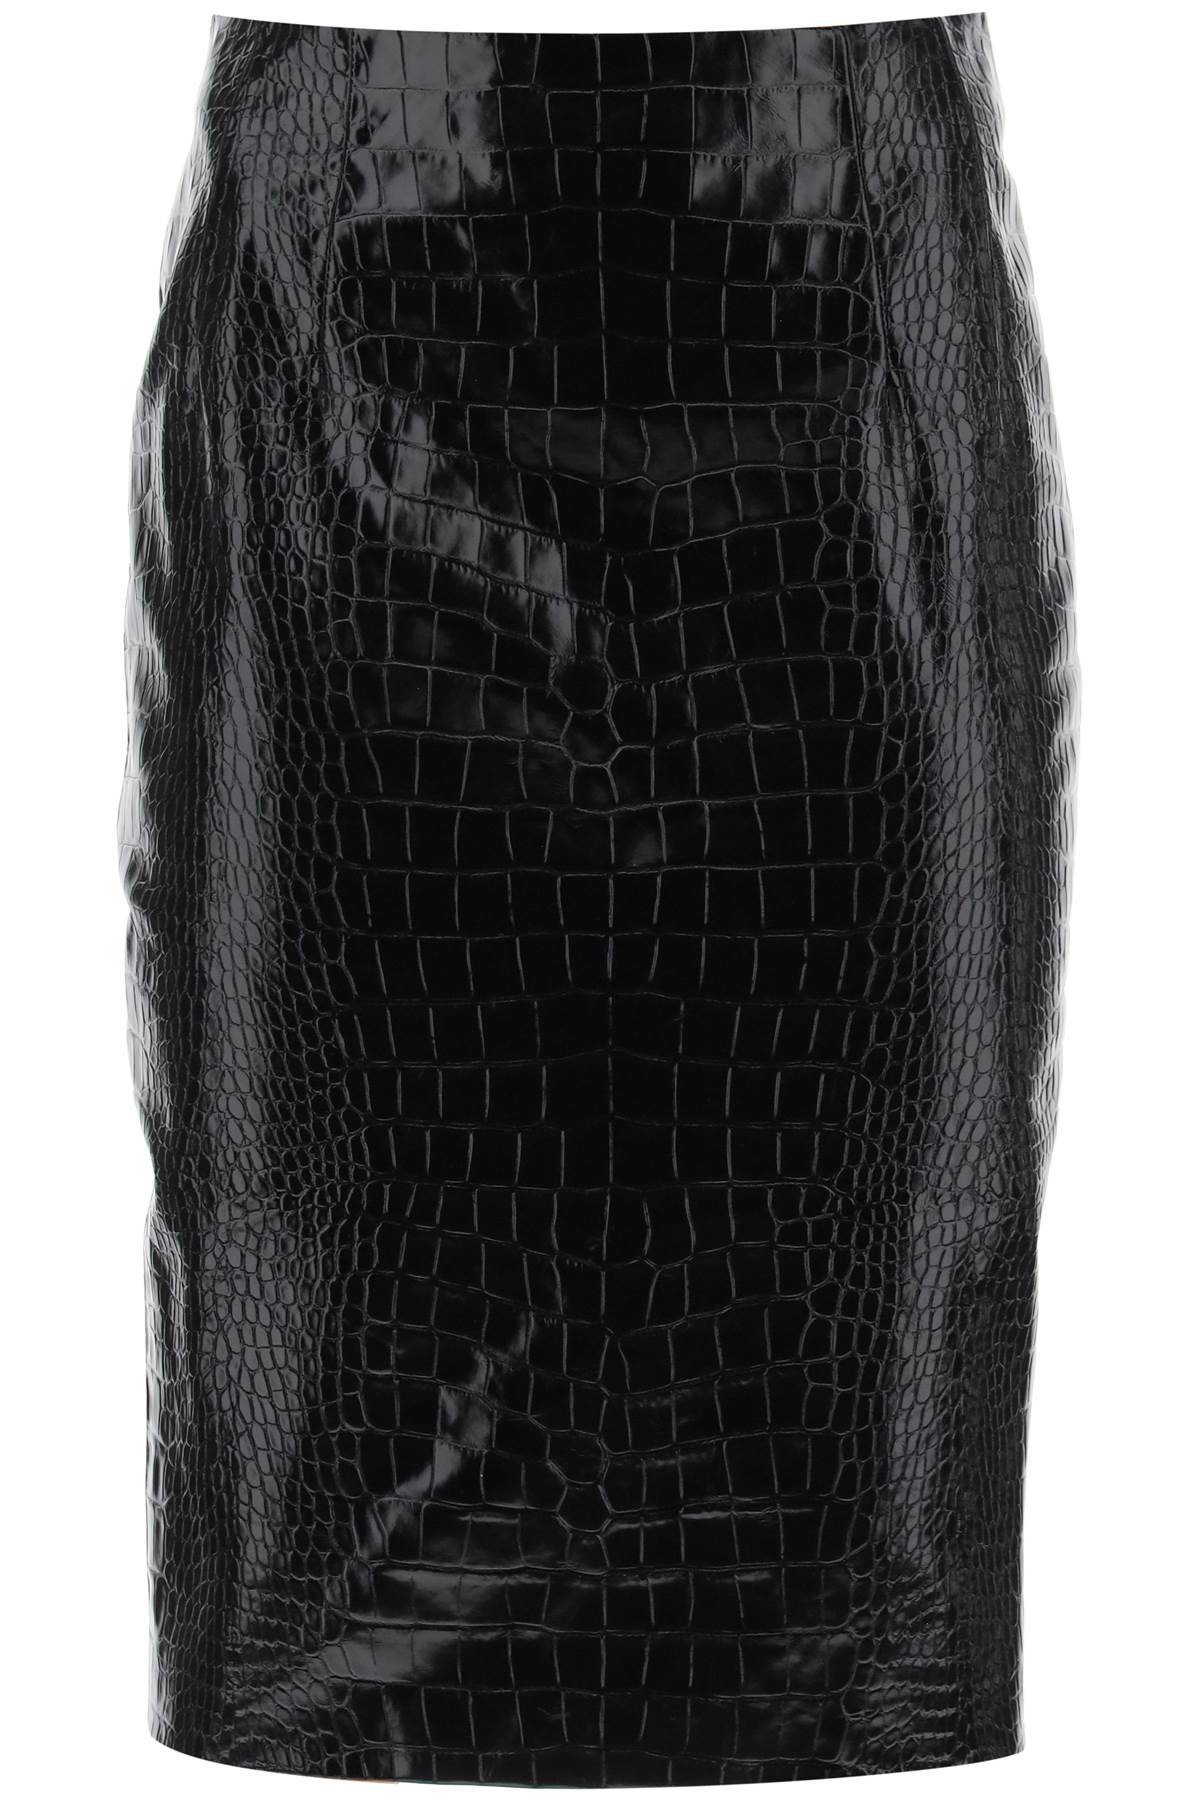 Versace VERSACE croco-effect leather pencil skirt